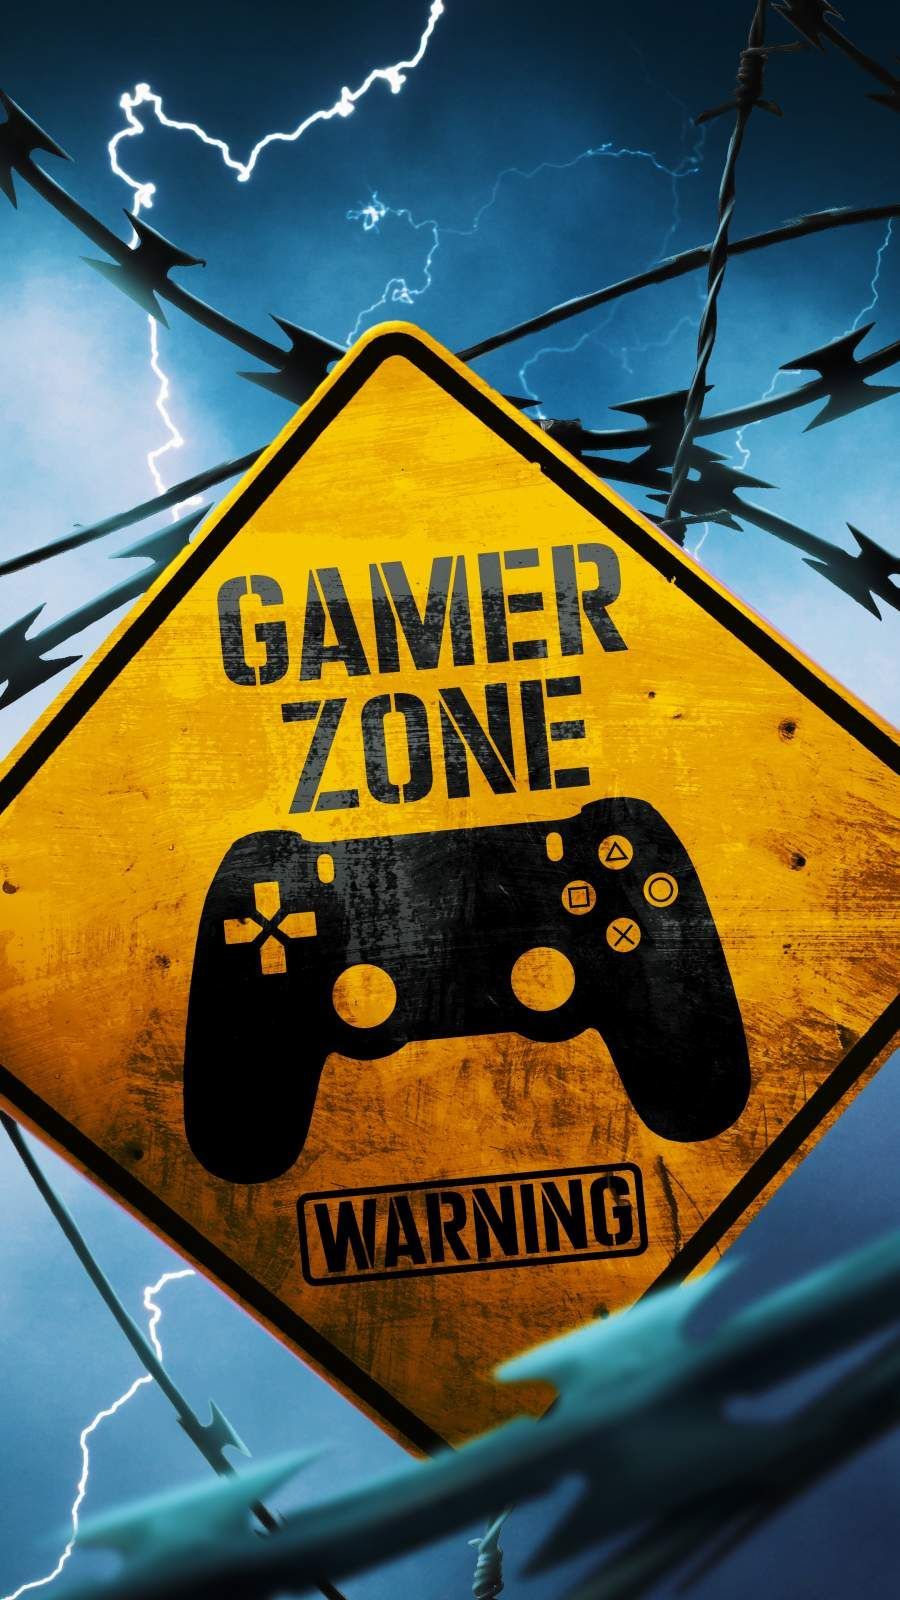 Gamer Zone Warning iPhone Wallpaper. Game wallpaper iphone, Best